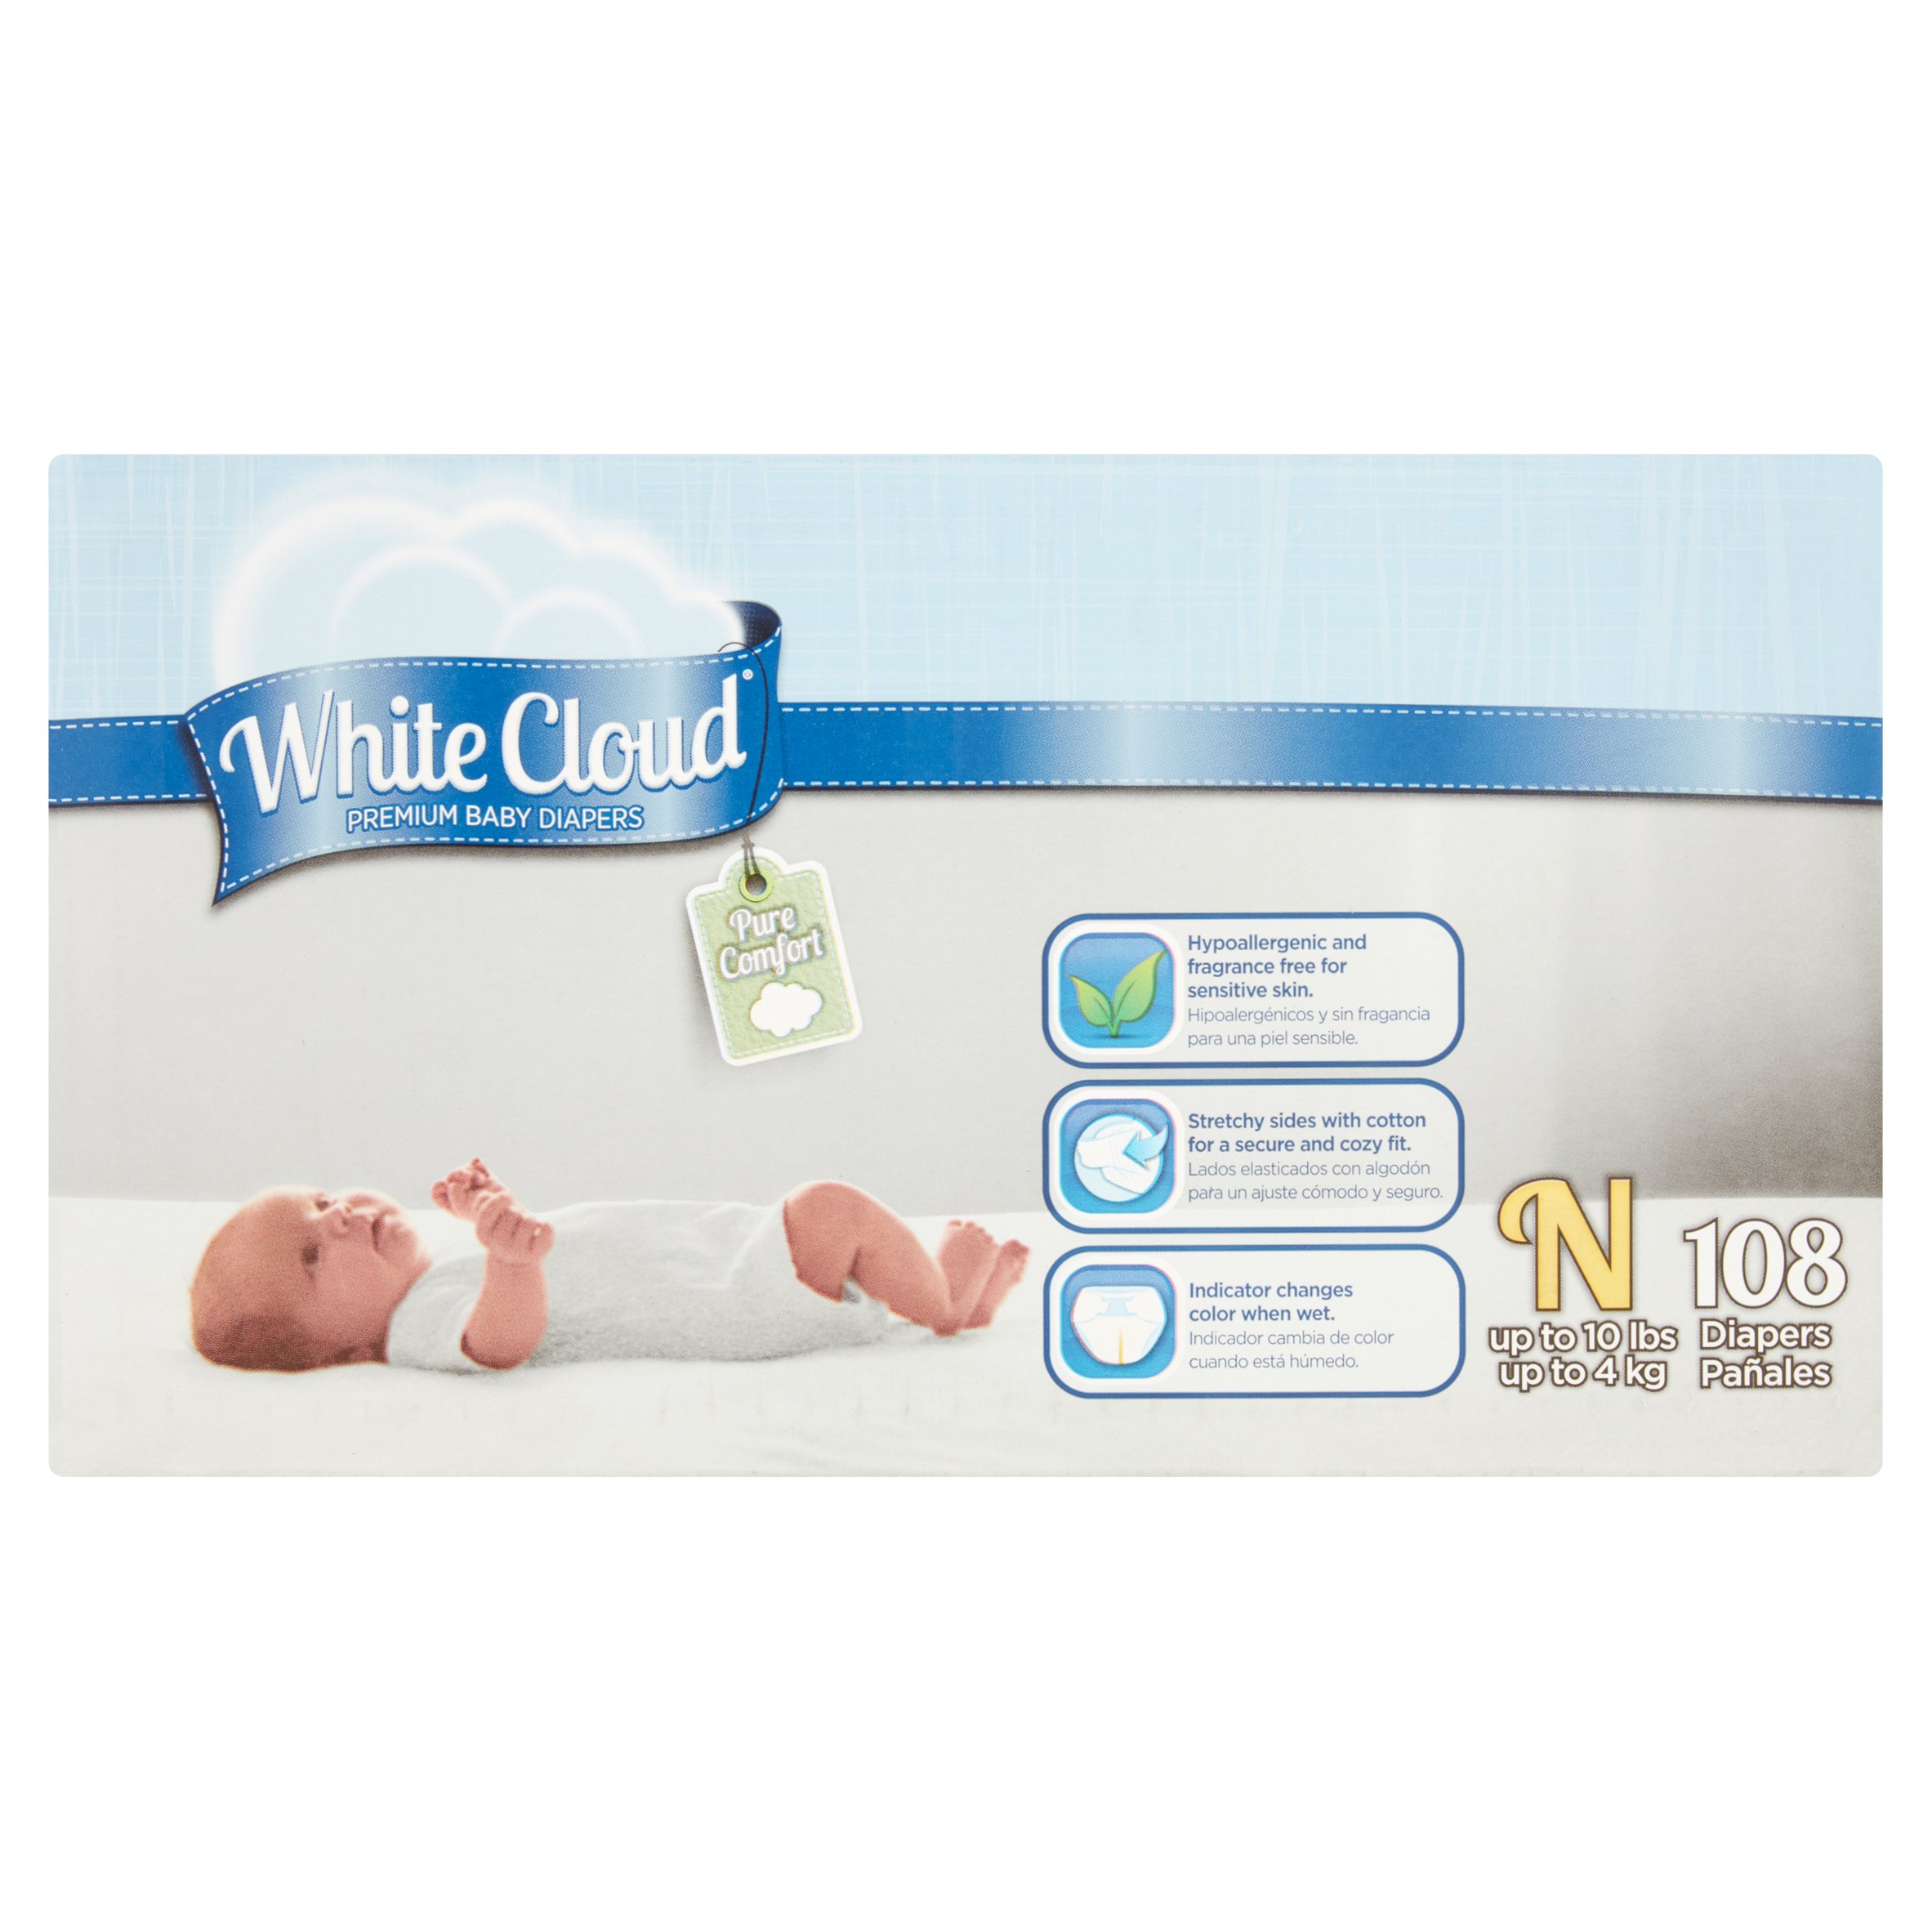 White Cloud Diaper Club Box, Newborn,108 ct - image 1 of 5